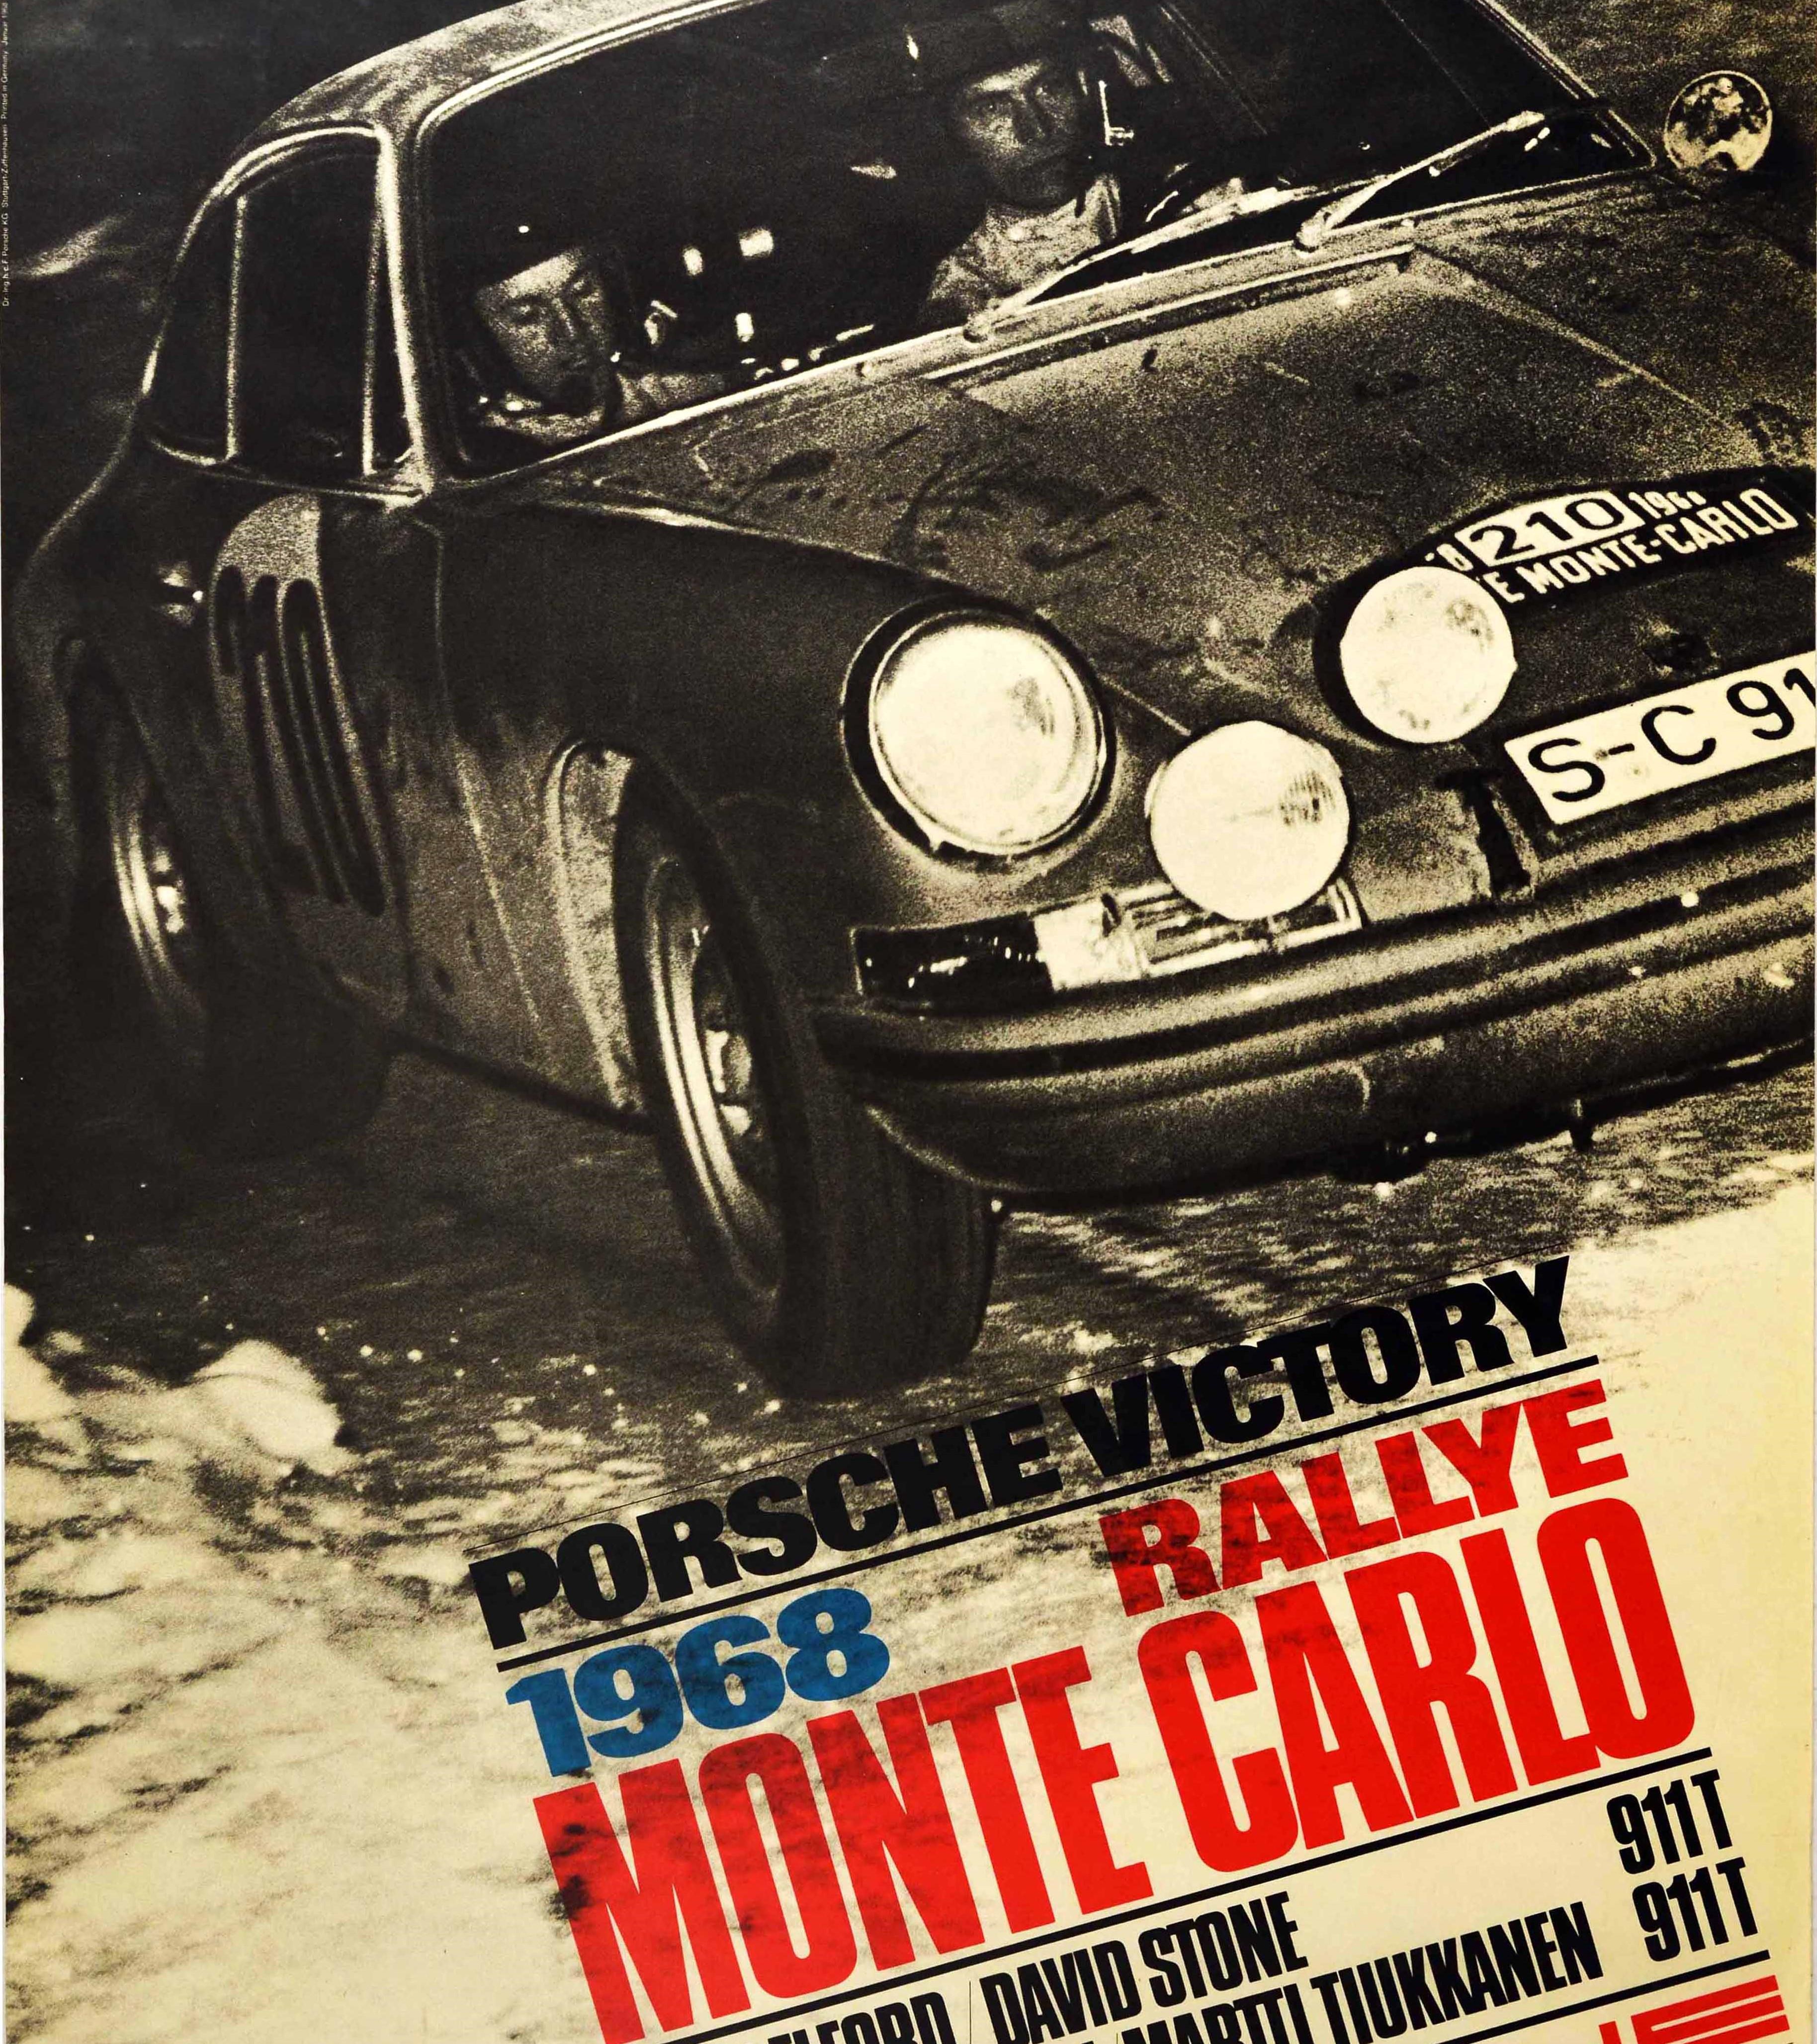 monte carlo car 1968